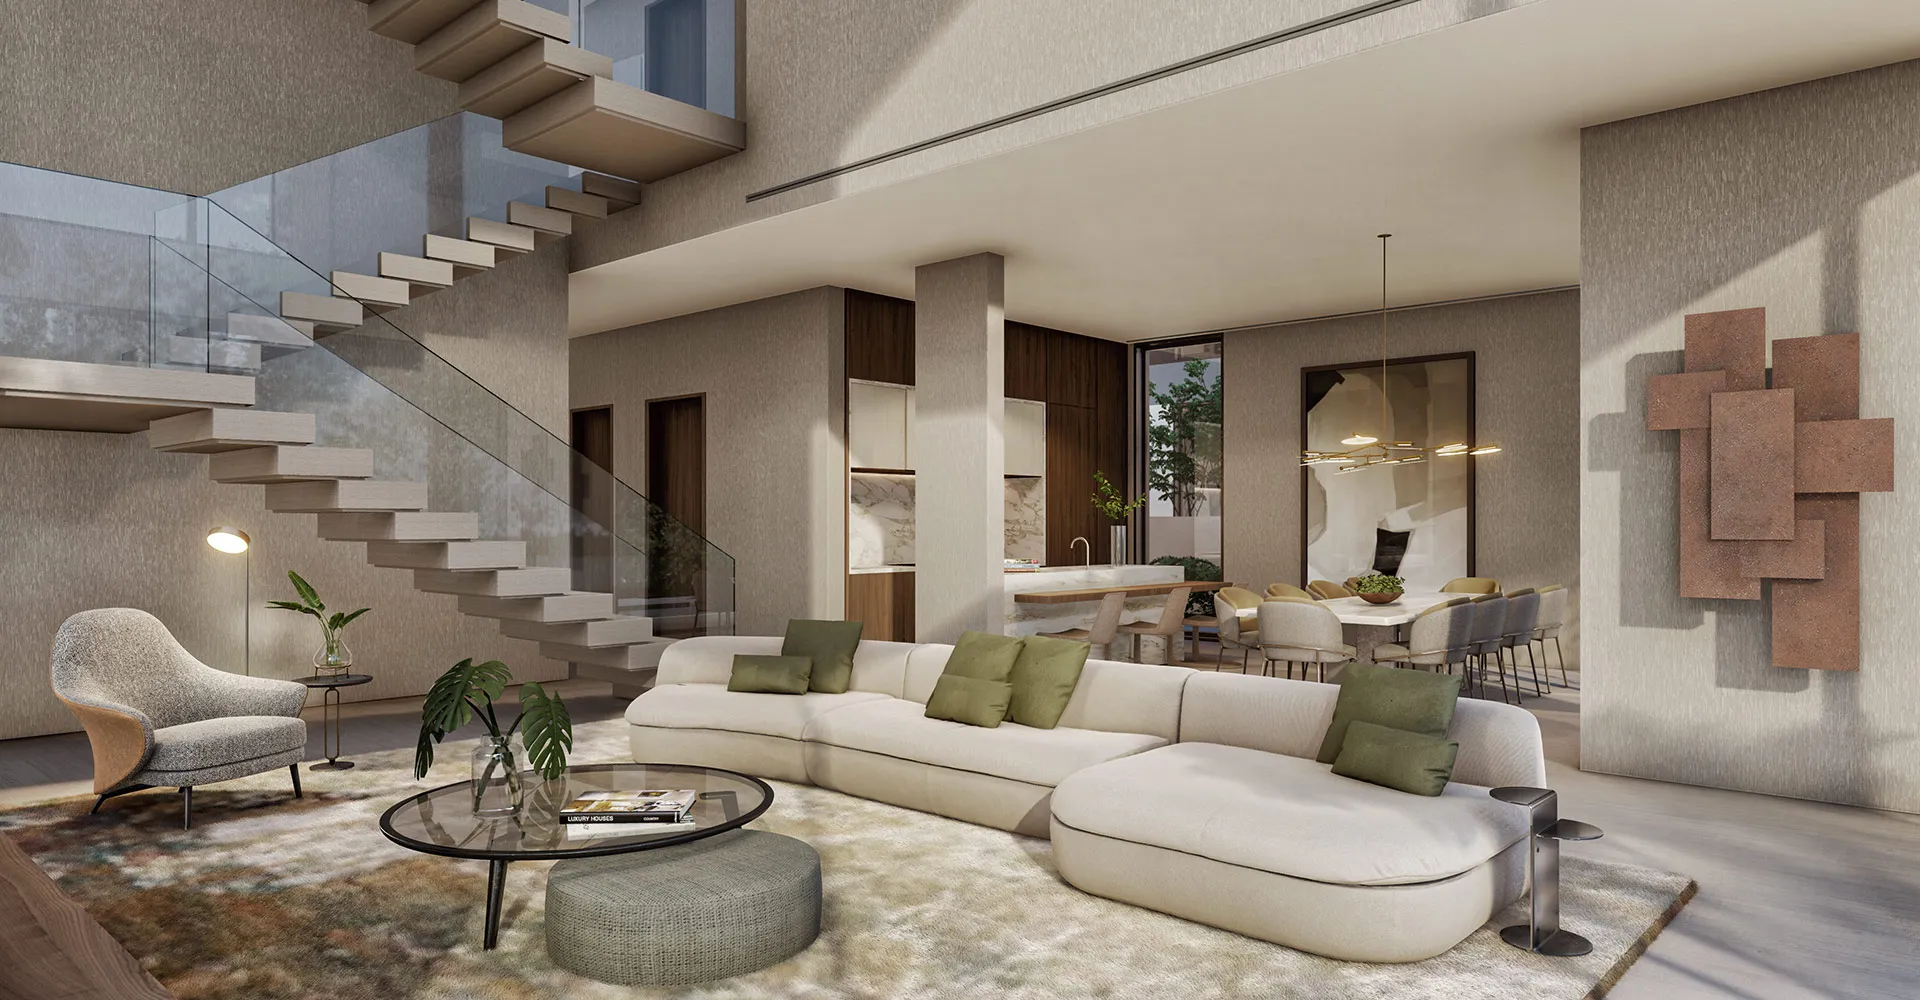 Interiors in new project by Meraas in Nad Al Sheba, Dubai — Nad Al Sheba Gardens